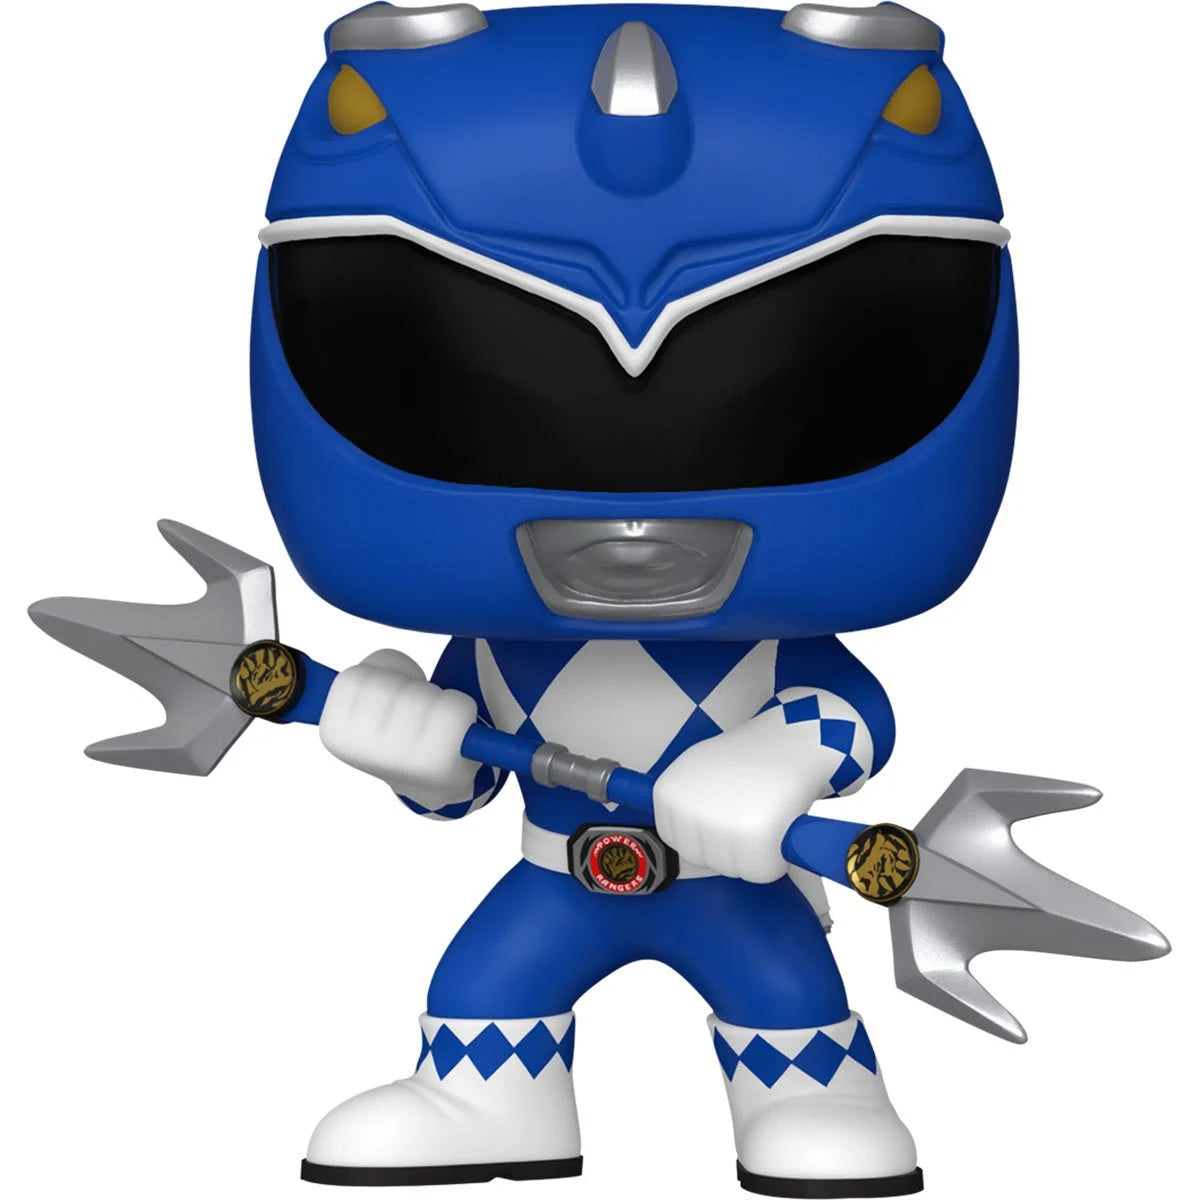 Funko Pop TV: Mighty Morphin Power Rangers 30 Aniversario - Blue Ranger